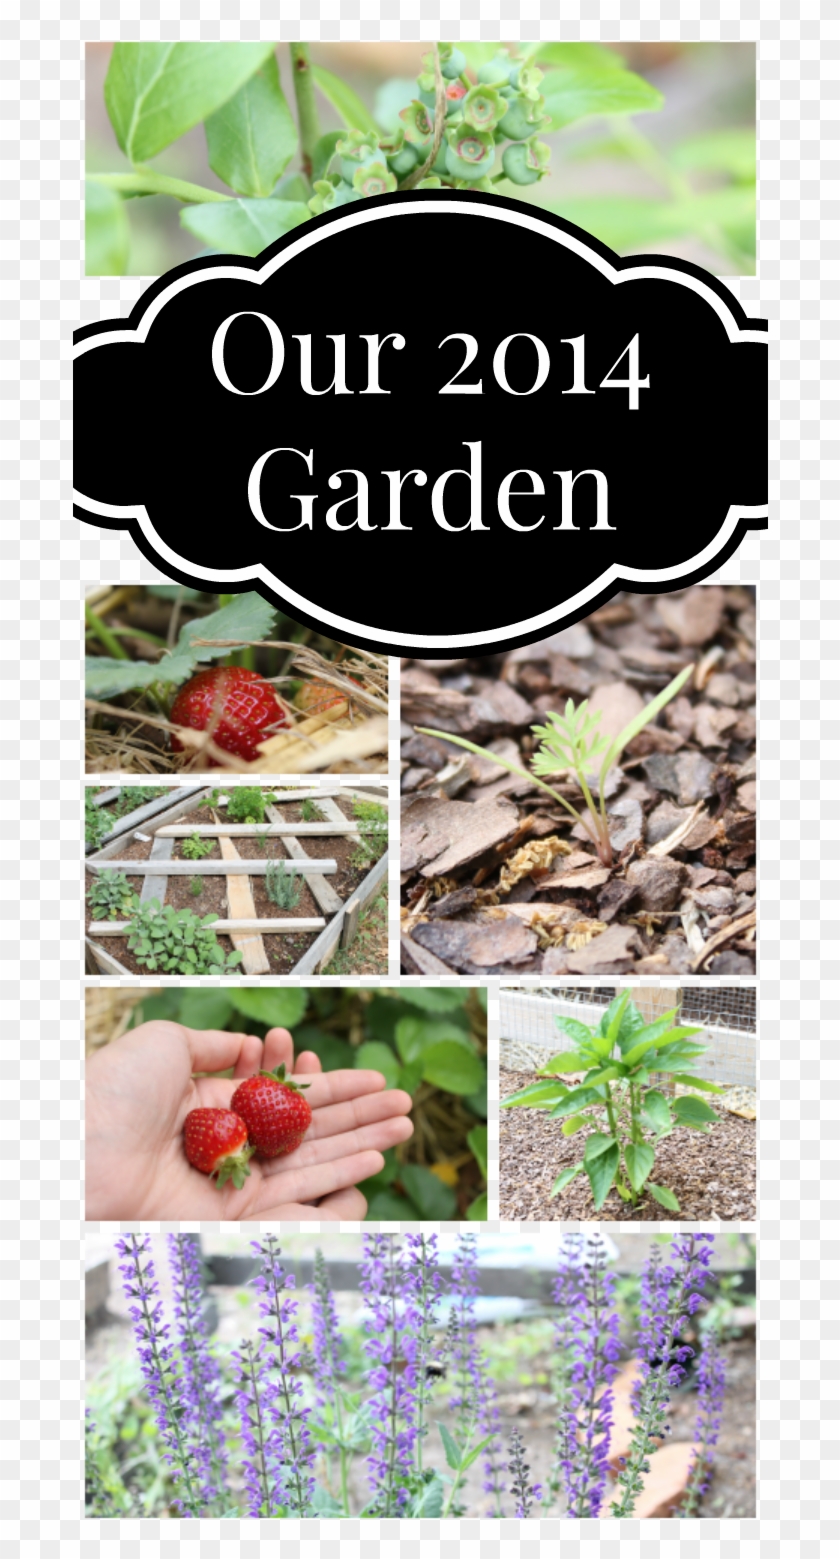 Our 2014 Garden - Strawberry Clipart #4613396